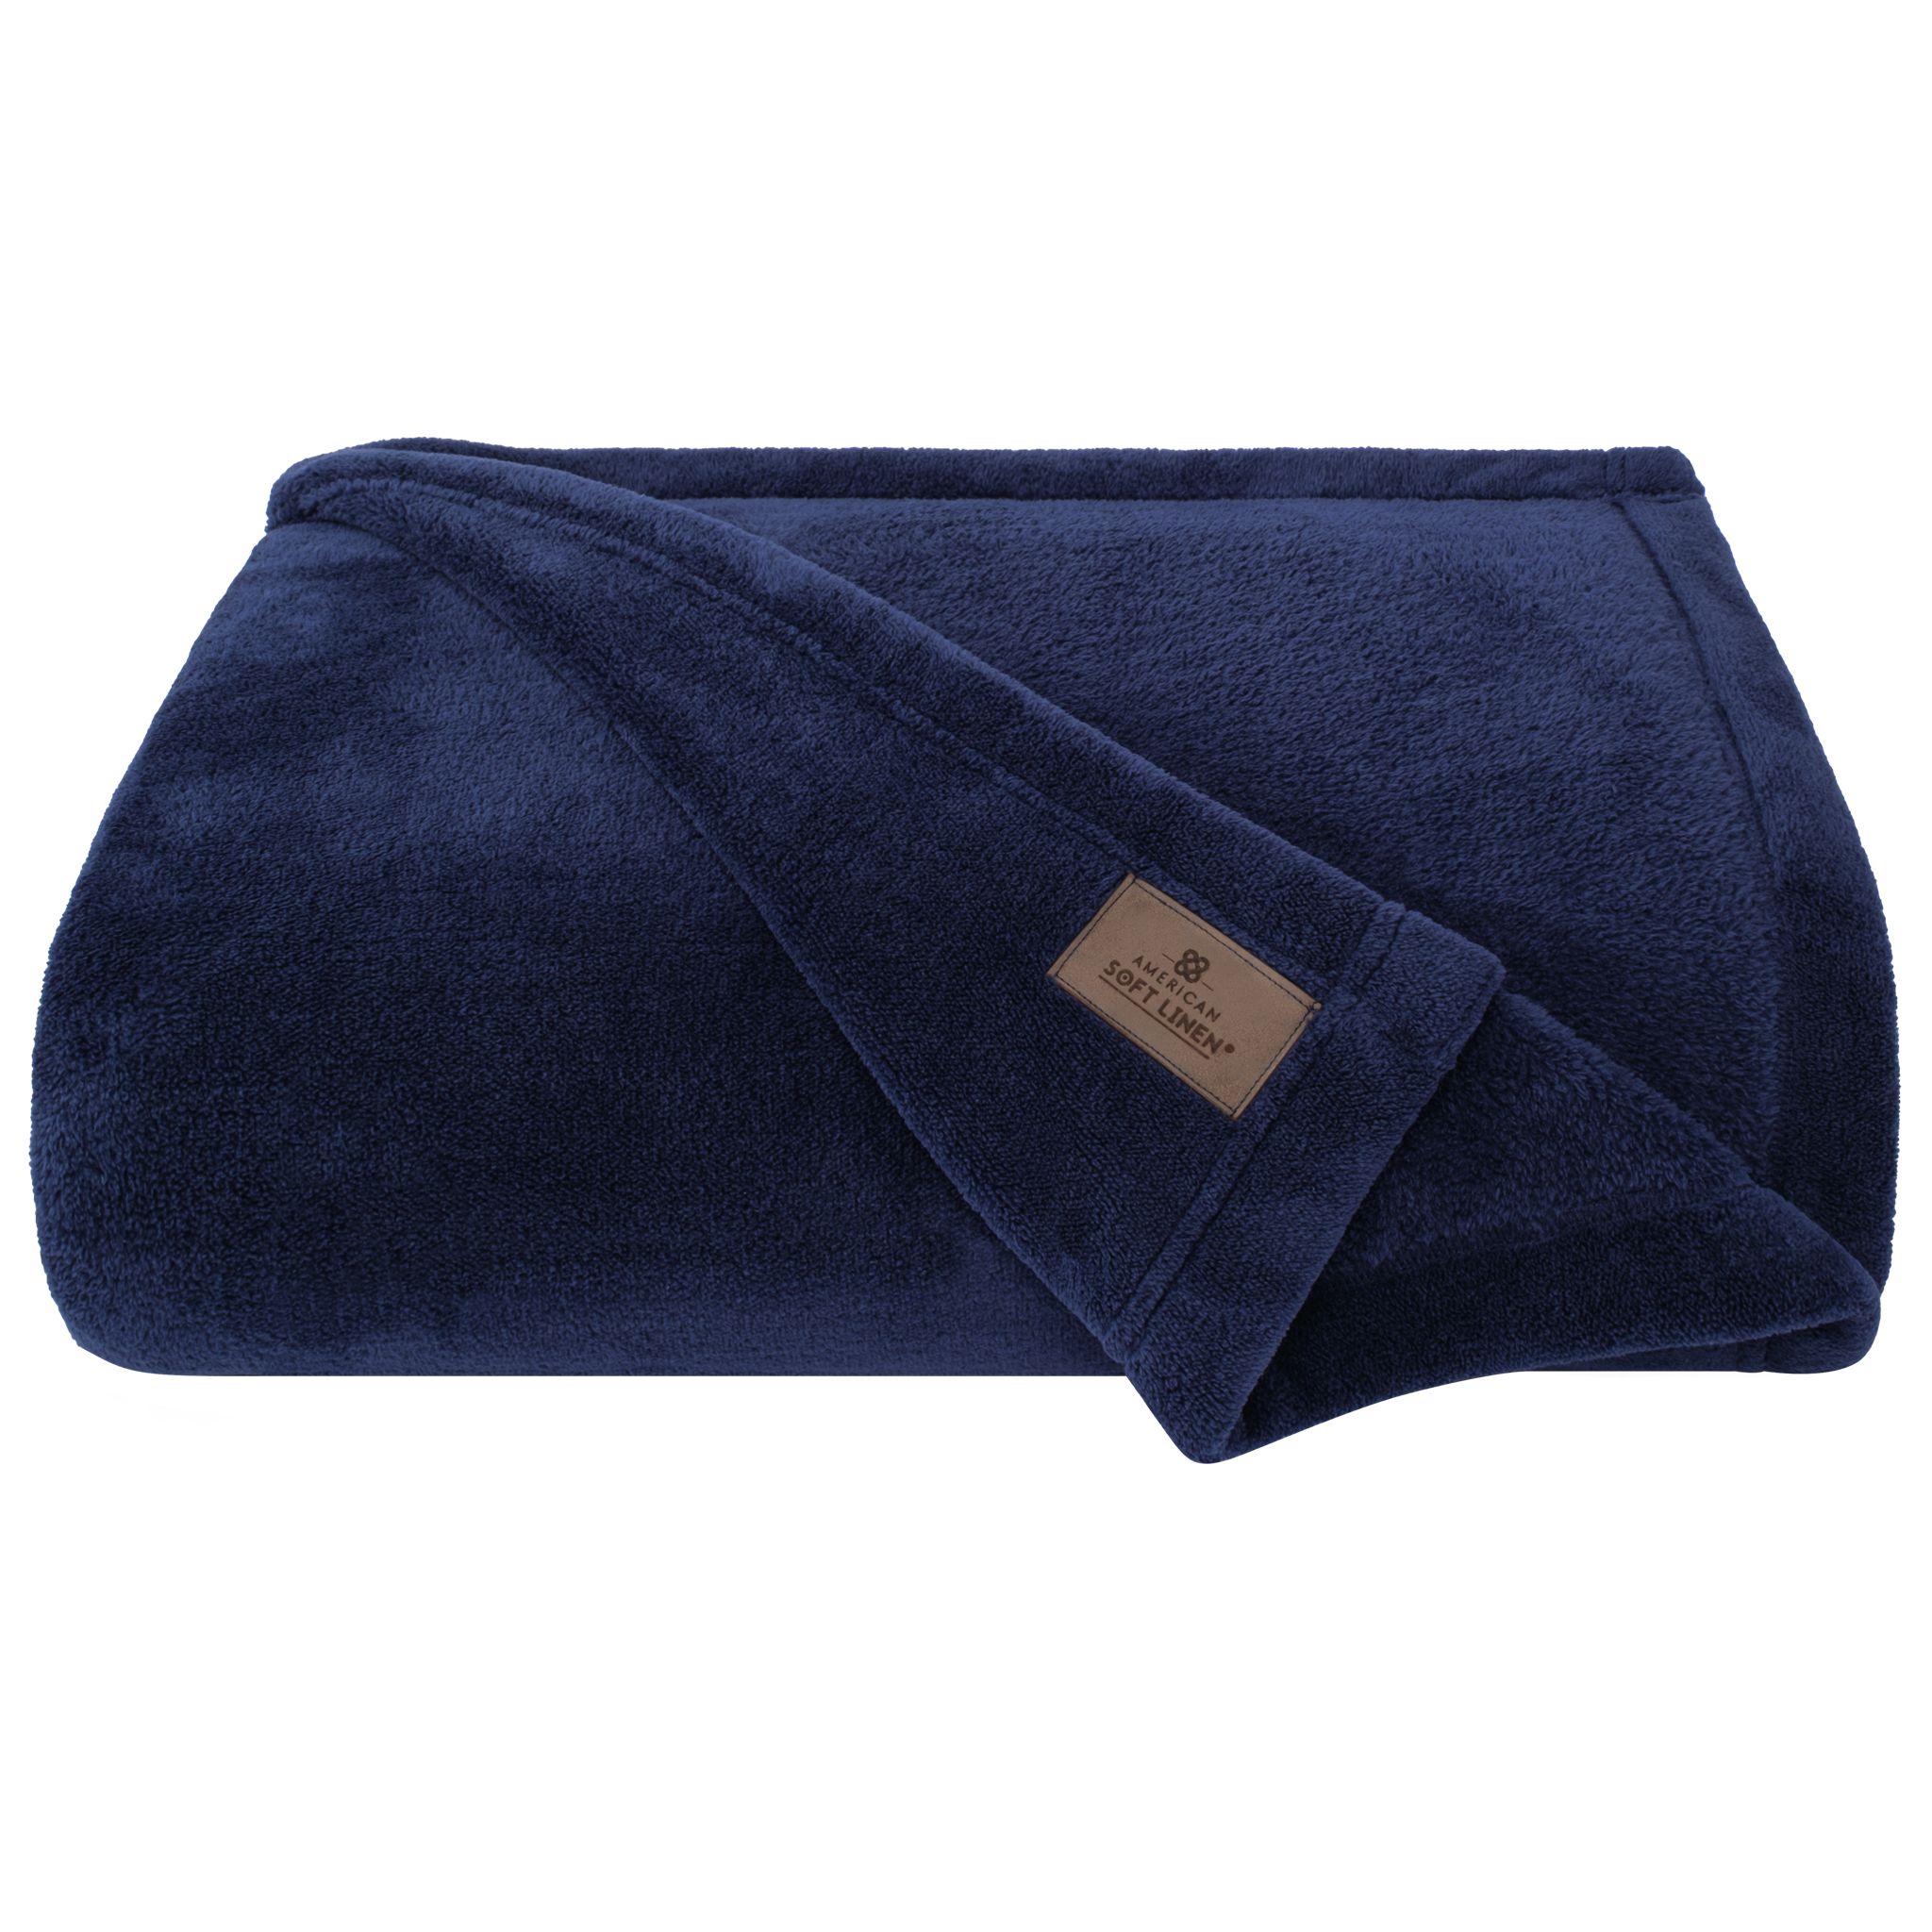 American Soft Linen - Bedding Fleece Blanket - Queen Size 85x90 inches - Navy-Blue - 3